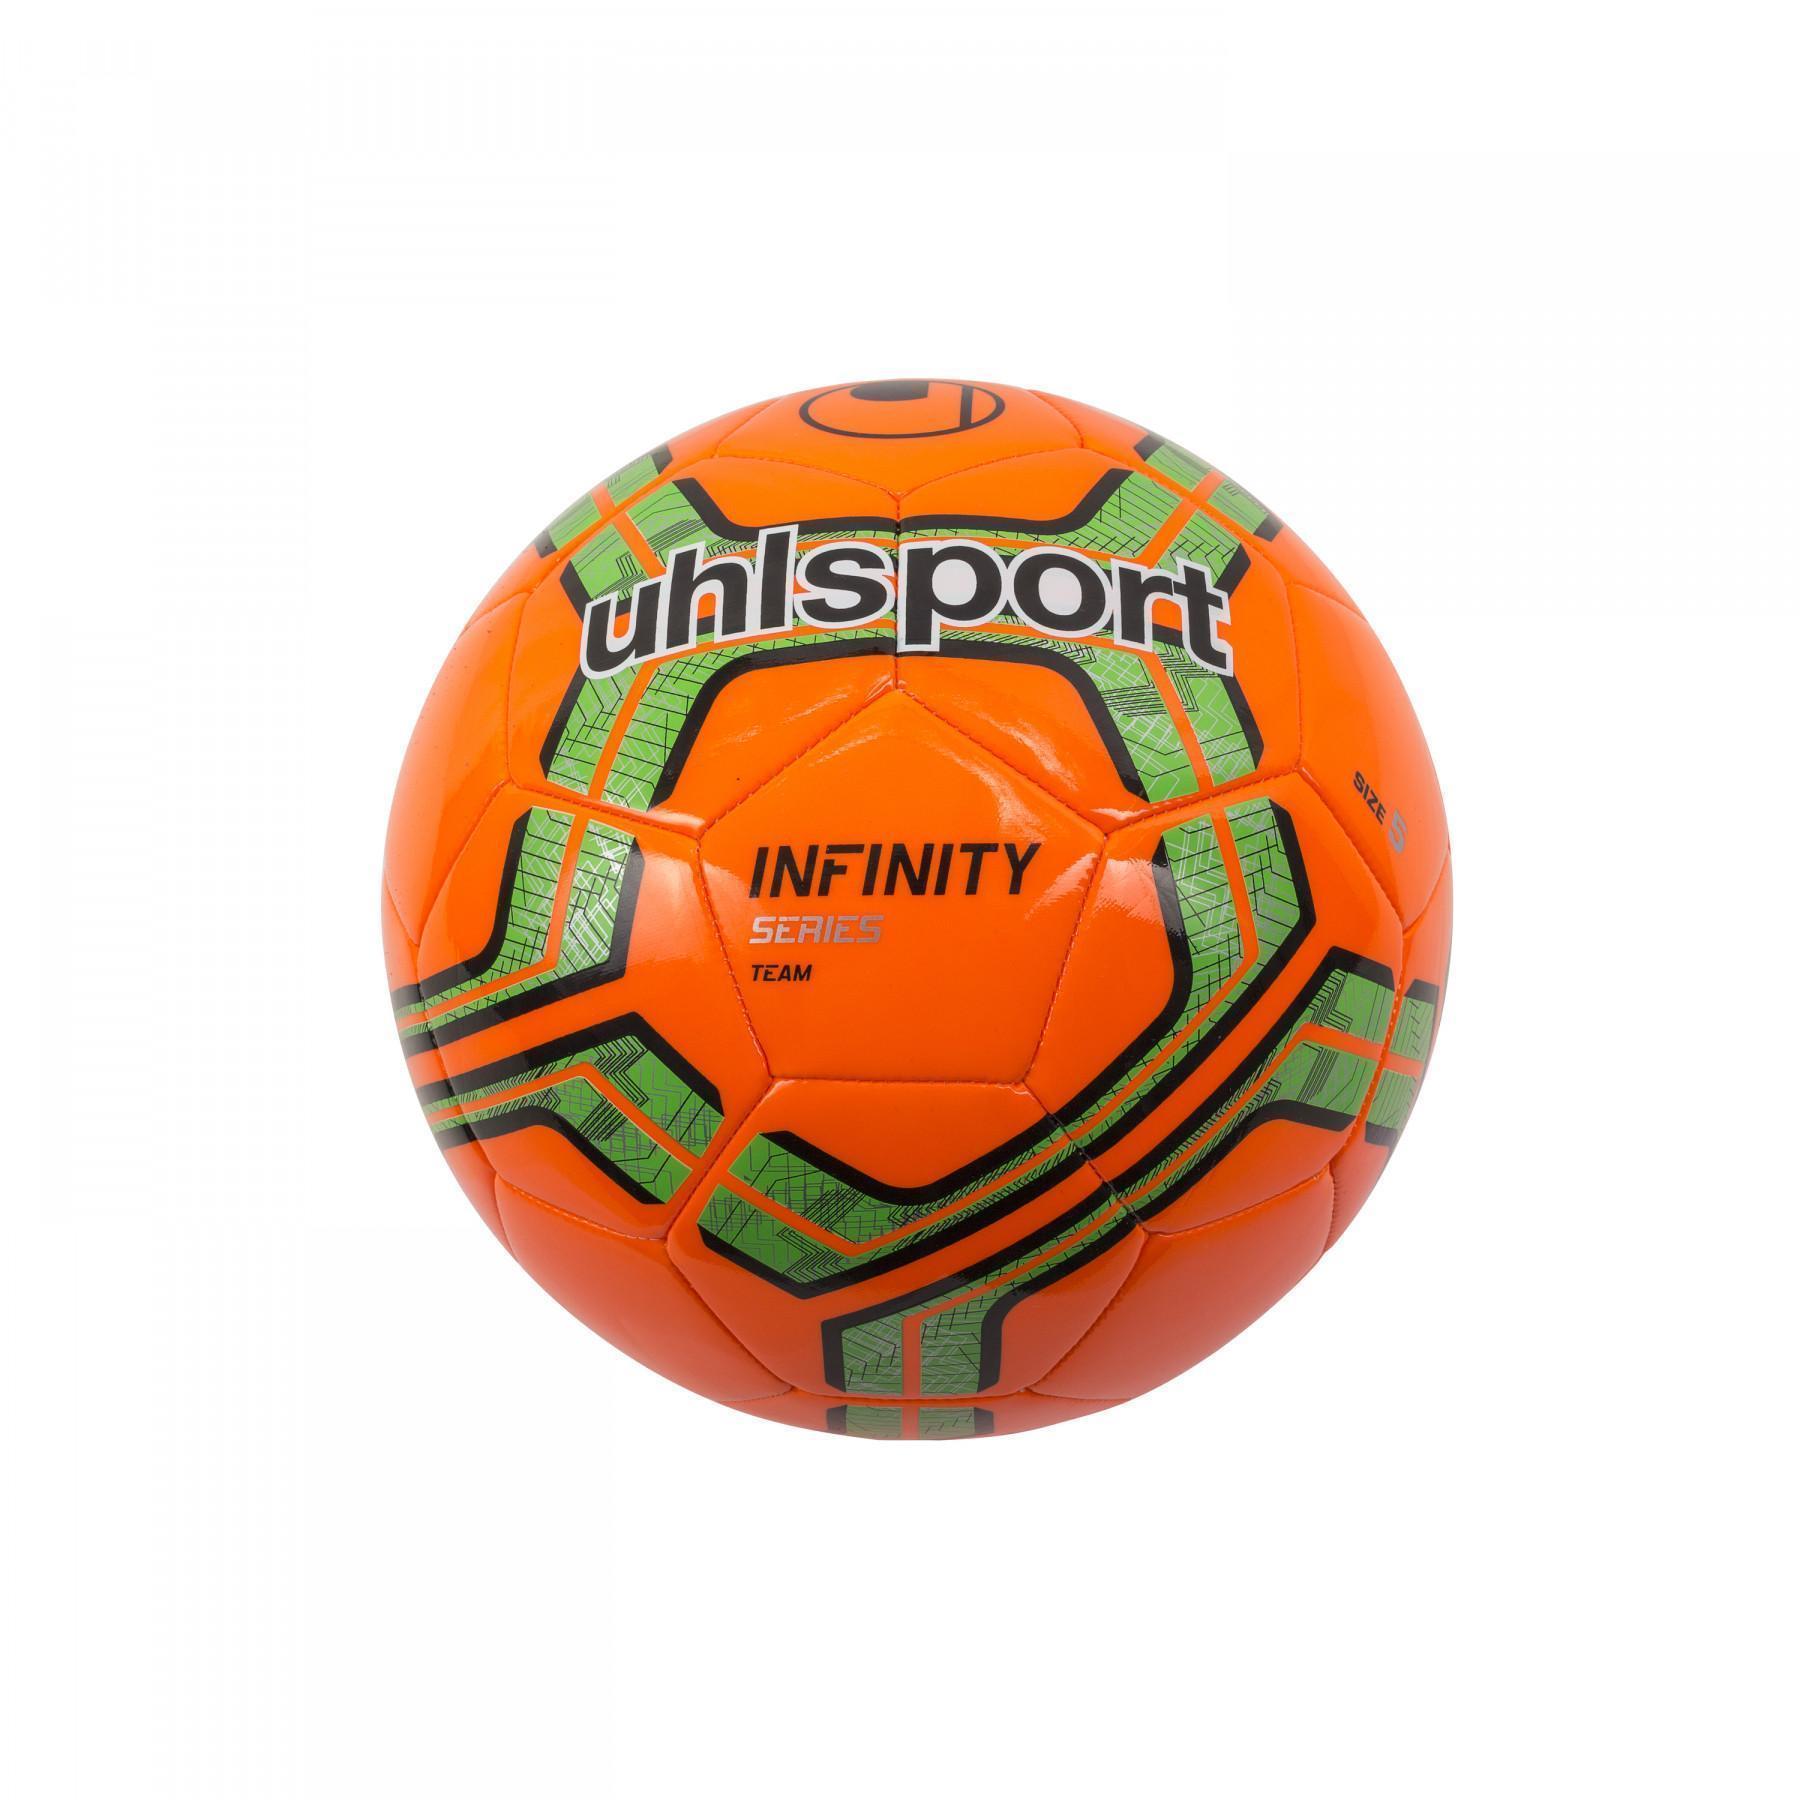 Lots de ballons Uhlsport Infinity Team (24 pièces) Taille 5